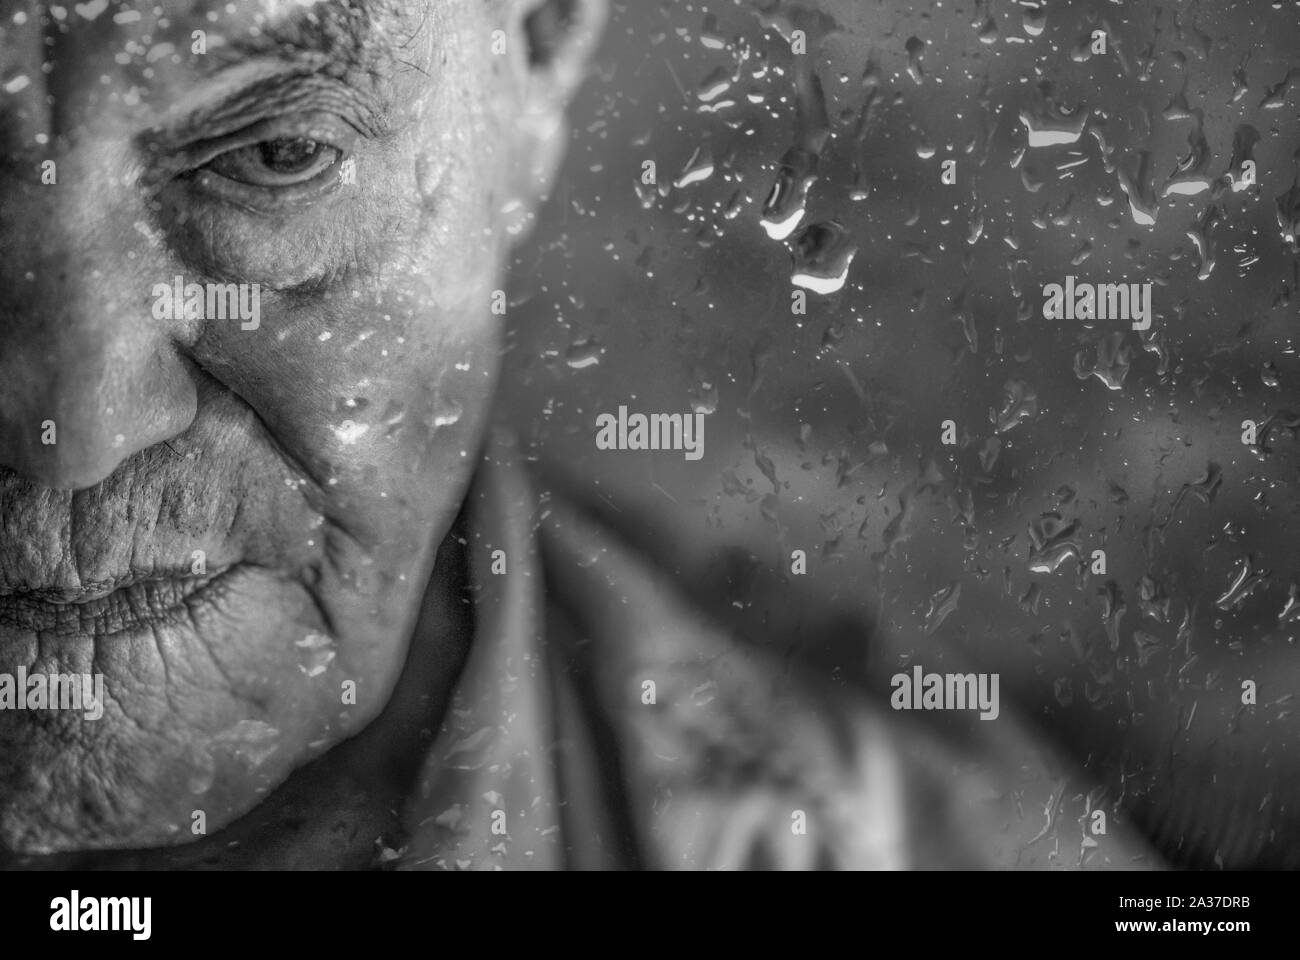 Paranaguá, Paraná, Brasil - Noviembre 18, 2015: Brasil hombre senior con ceguera detrás de una ventana con gotas de lluvia, pensativo Foto de stock